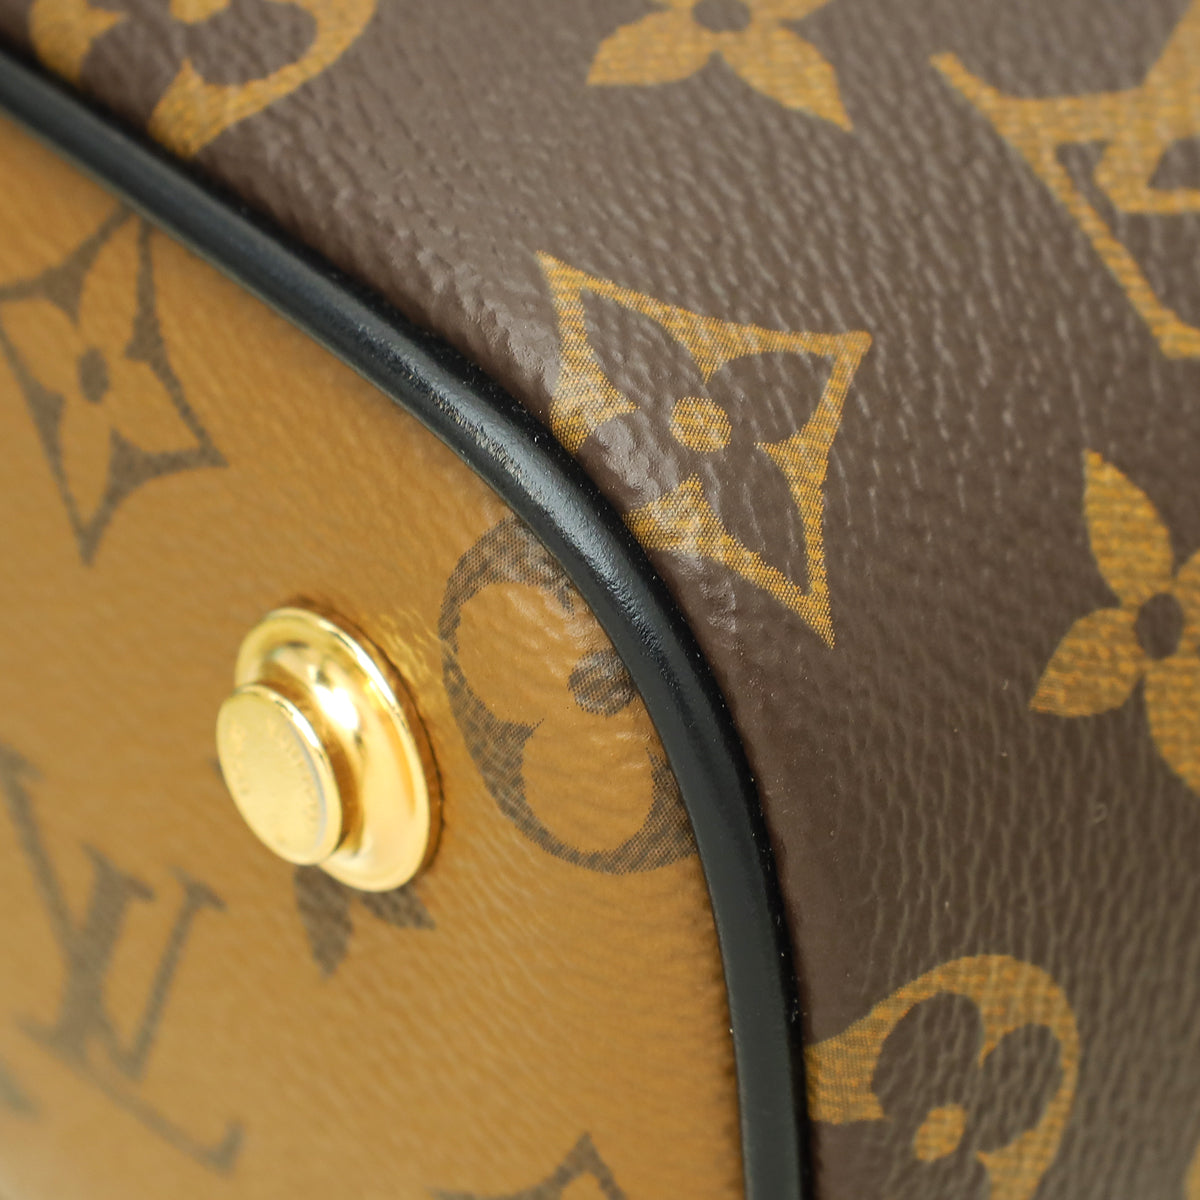 Louis Vuitton Bicolor Monogram Reverse Vanity PM Bag